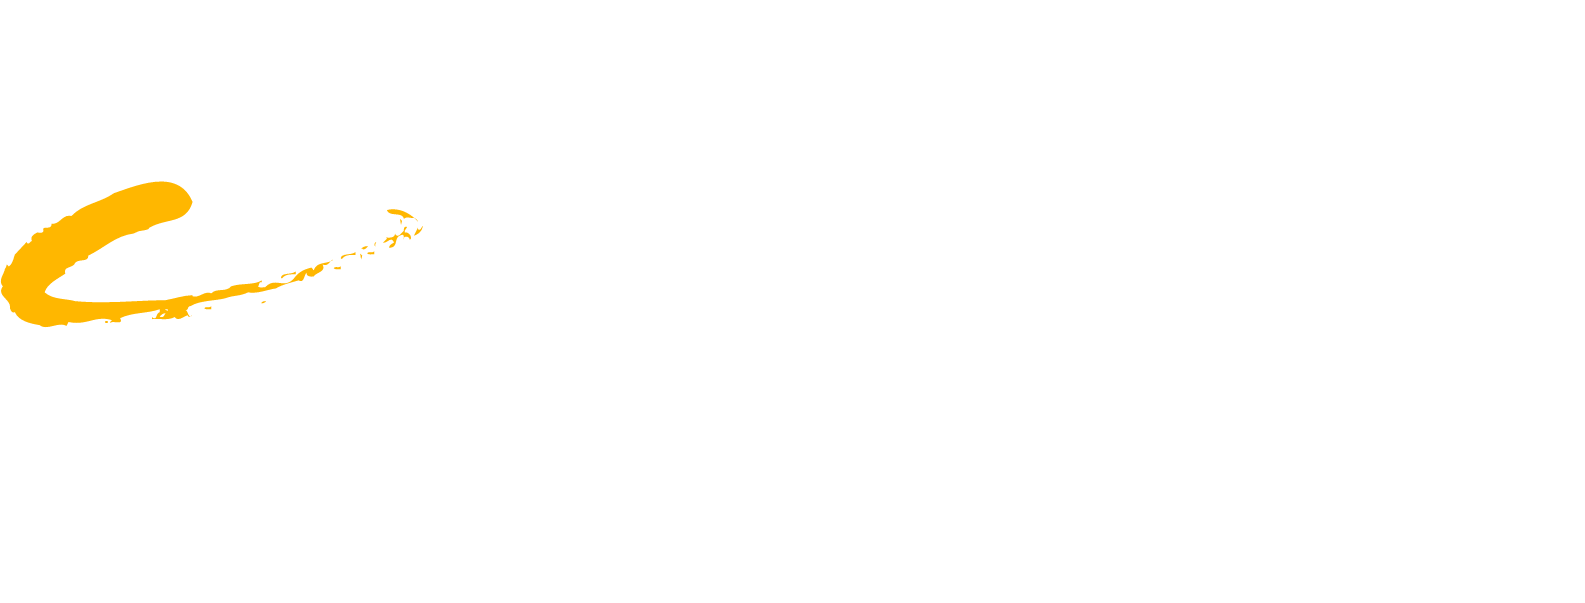 Logo Group Compass